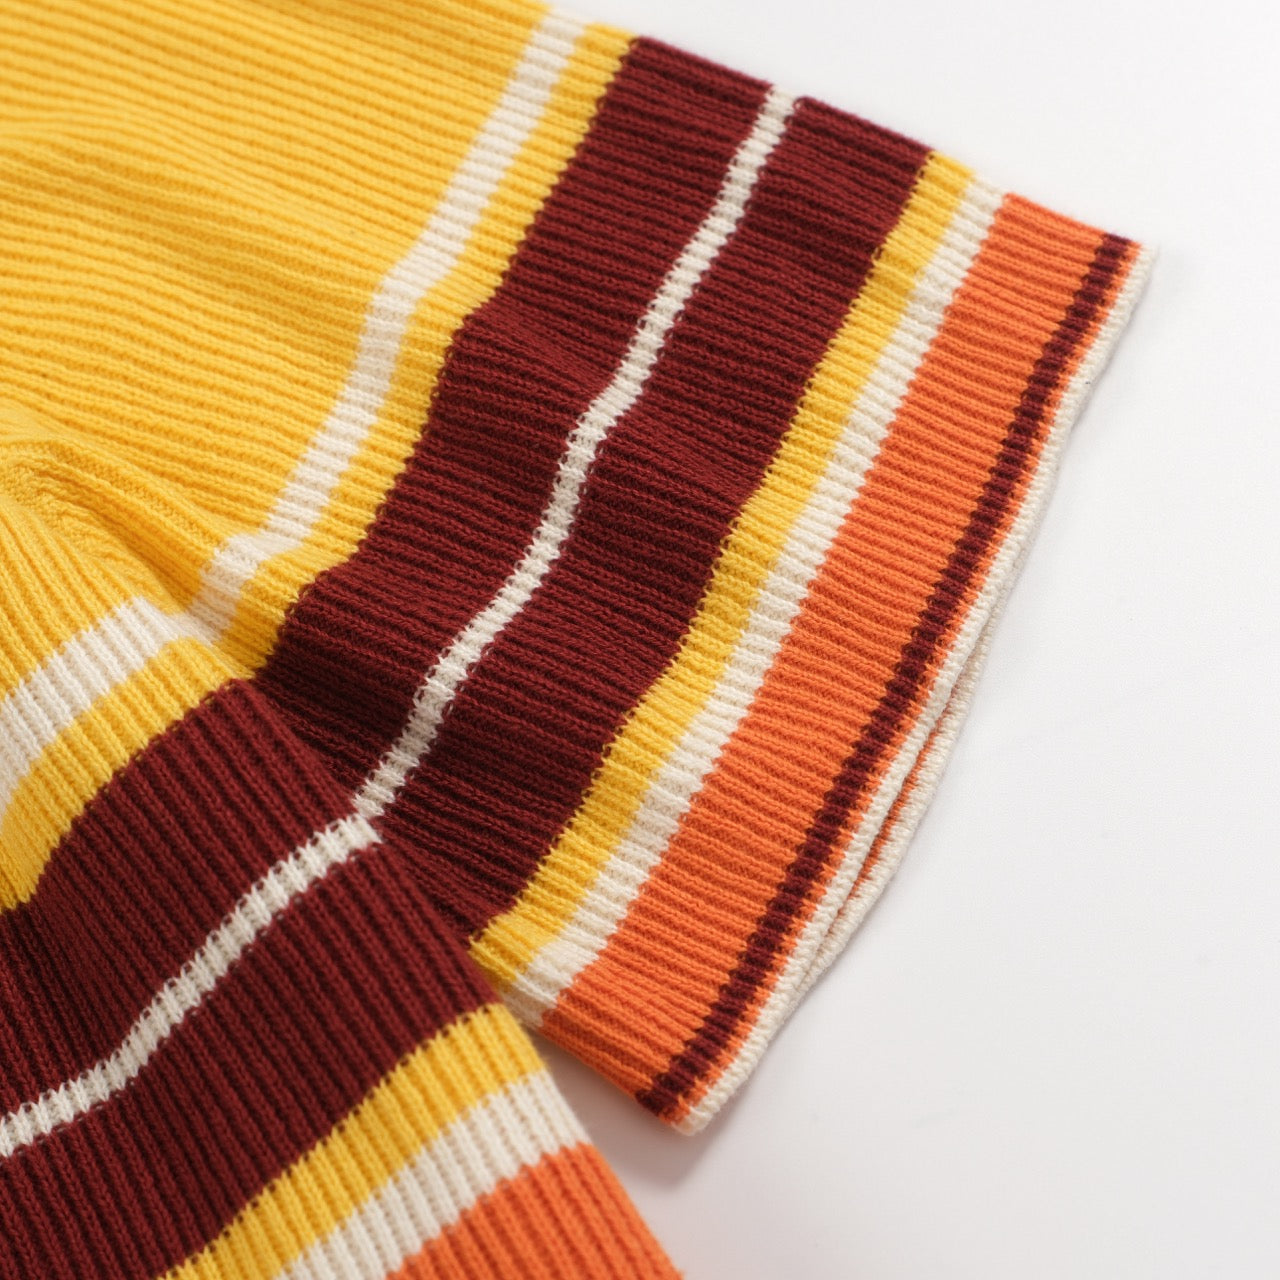 Men's Orange Knit Zip Collar Polo Shirt With Multi-Color Stripes